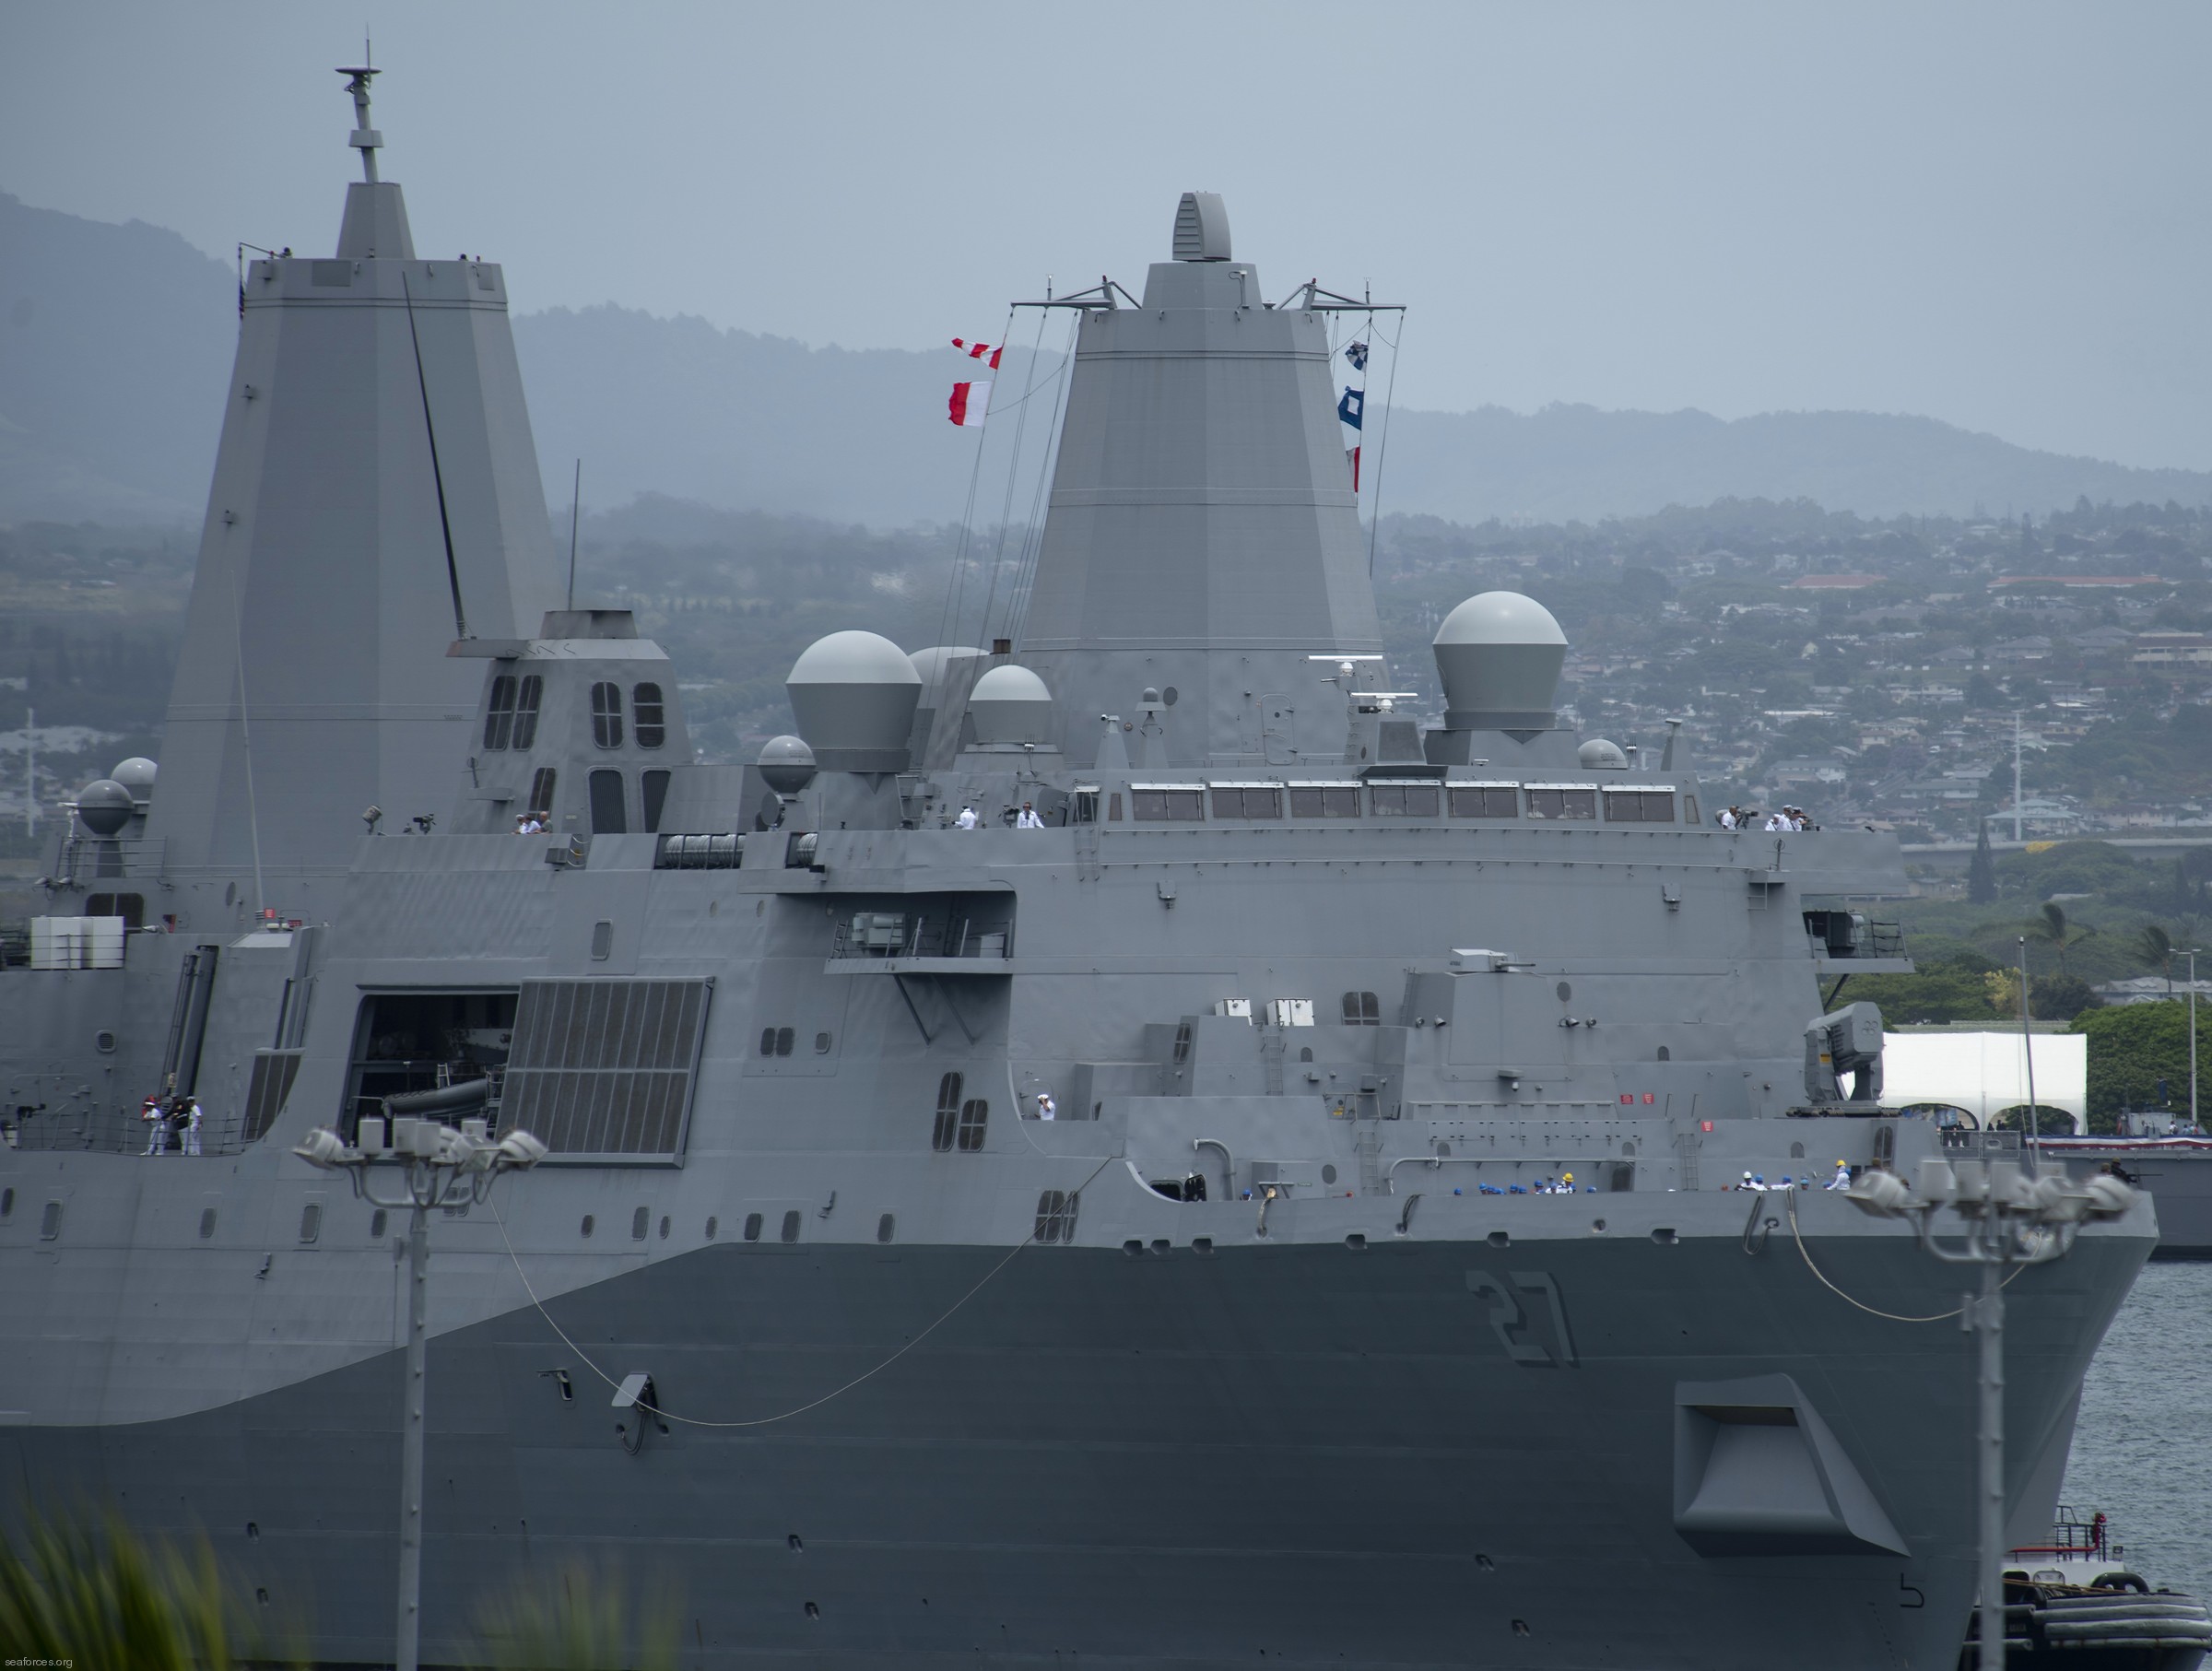 lpd-27 uss portland san antonio class amphibious transport dock ship navy 17 pearl harbor hawaii